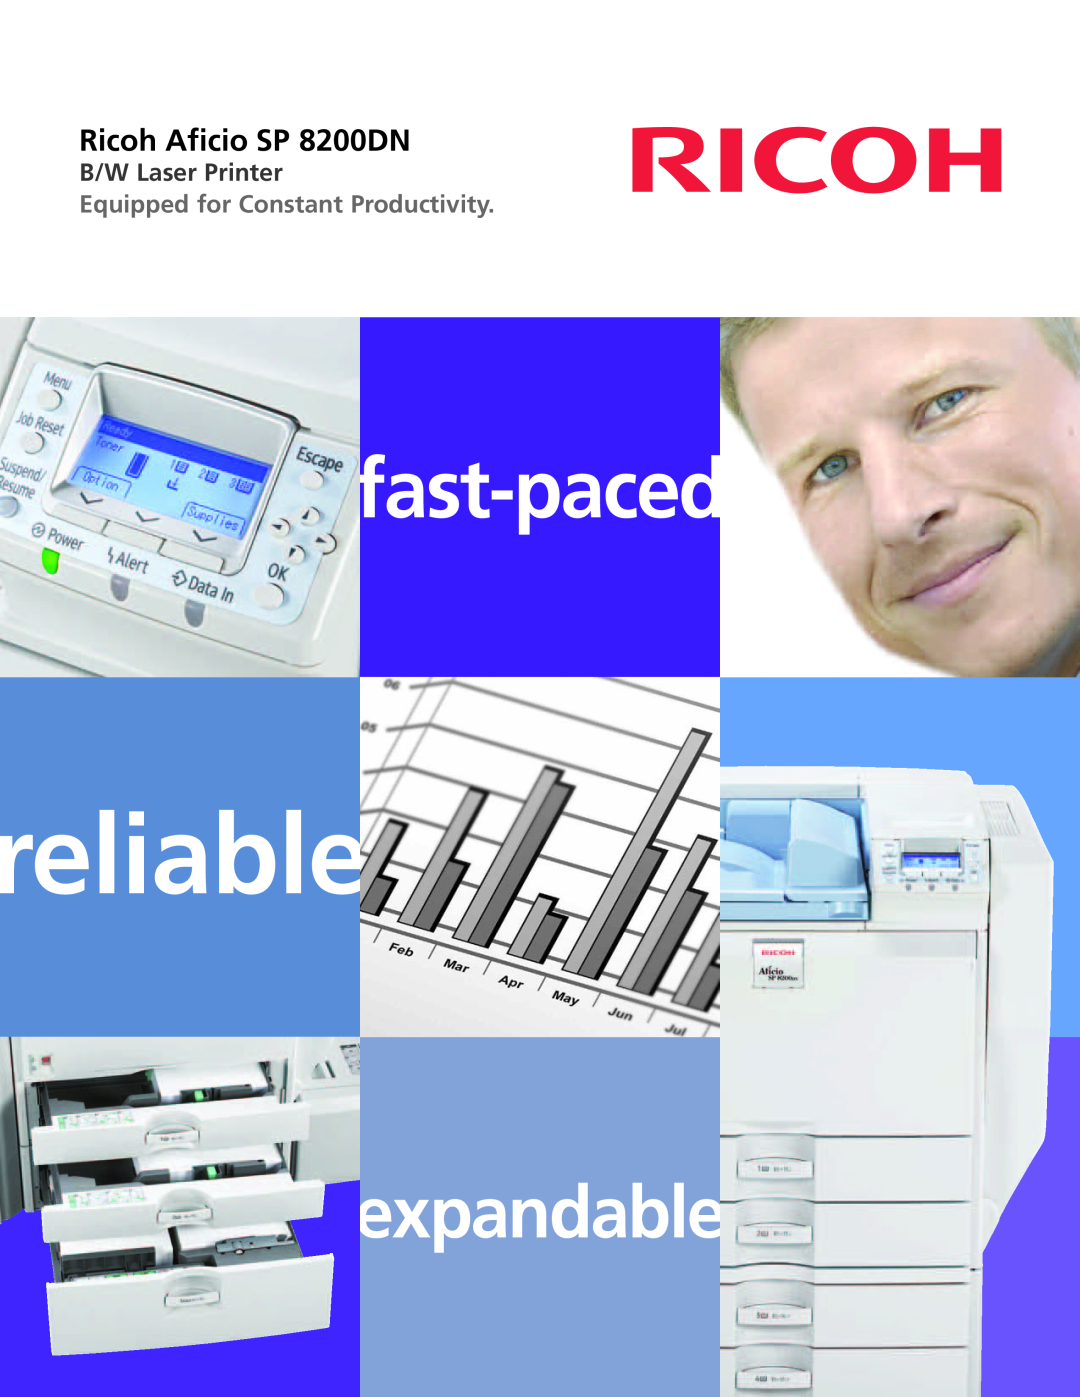 Ricoh manual reliable, fast-paced, expandable, Ricoh Aficio SP 8200DN, B/W Laser Printer 